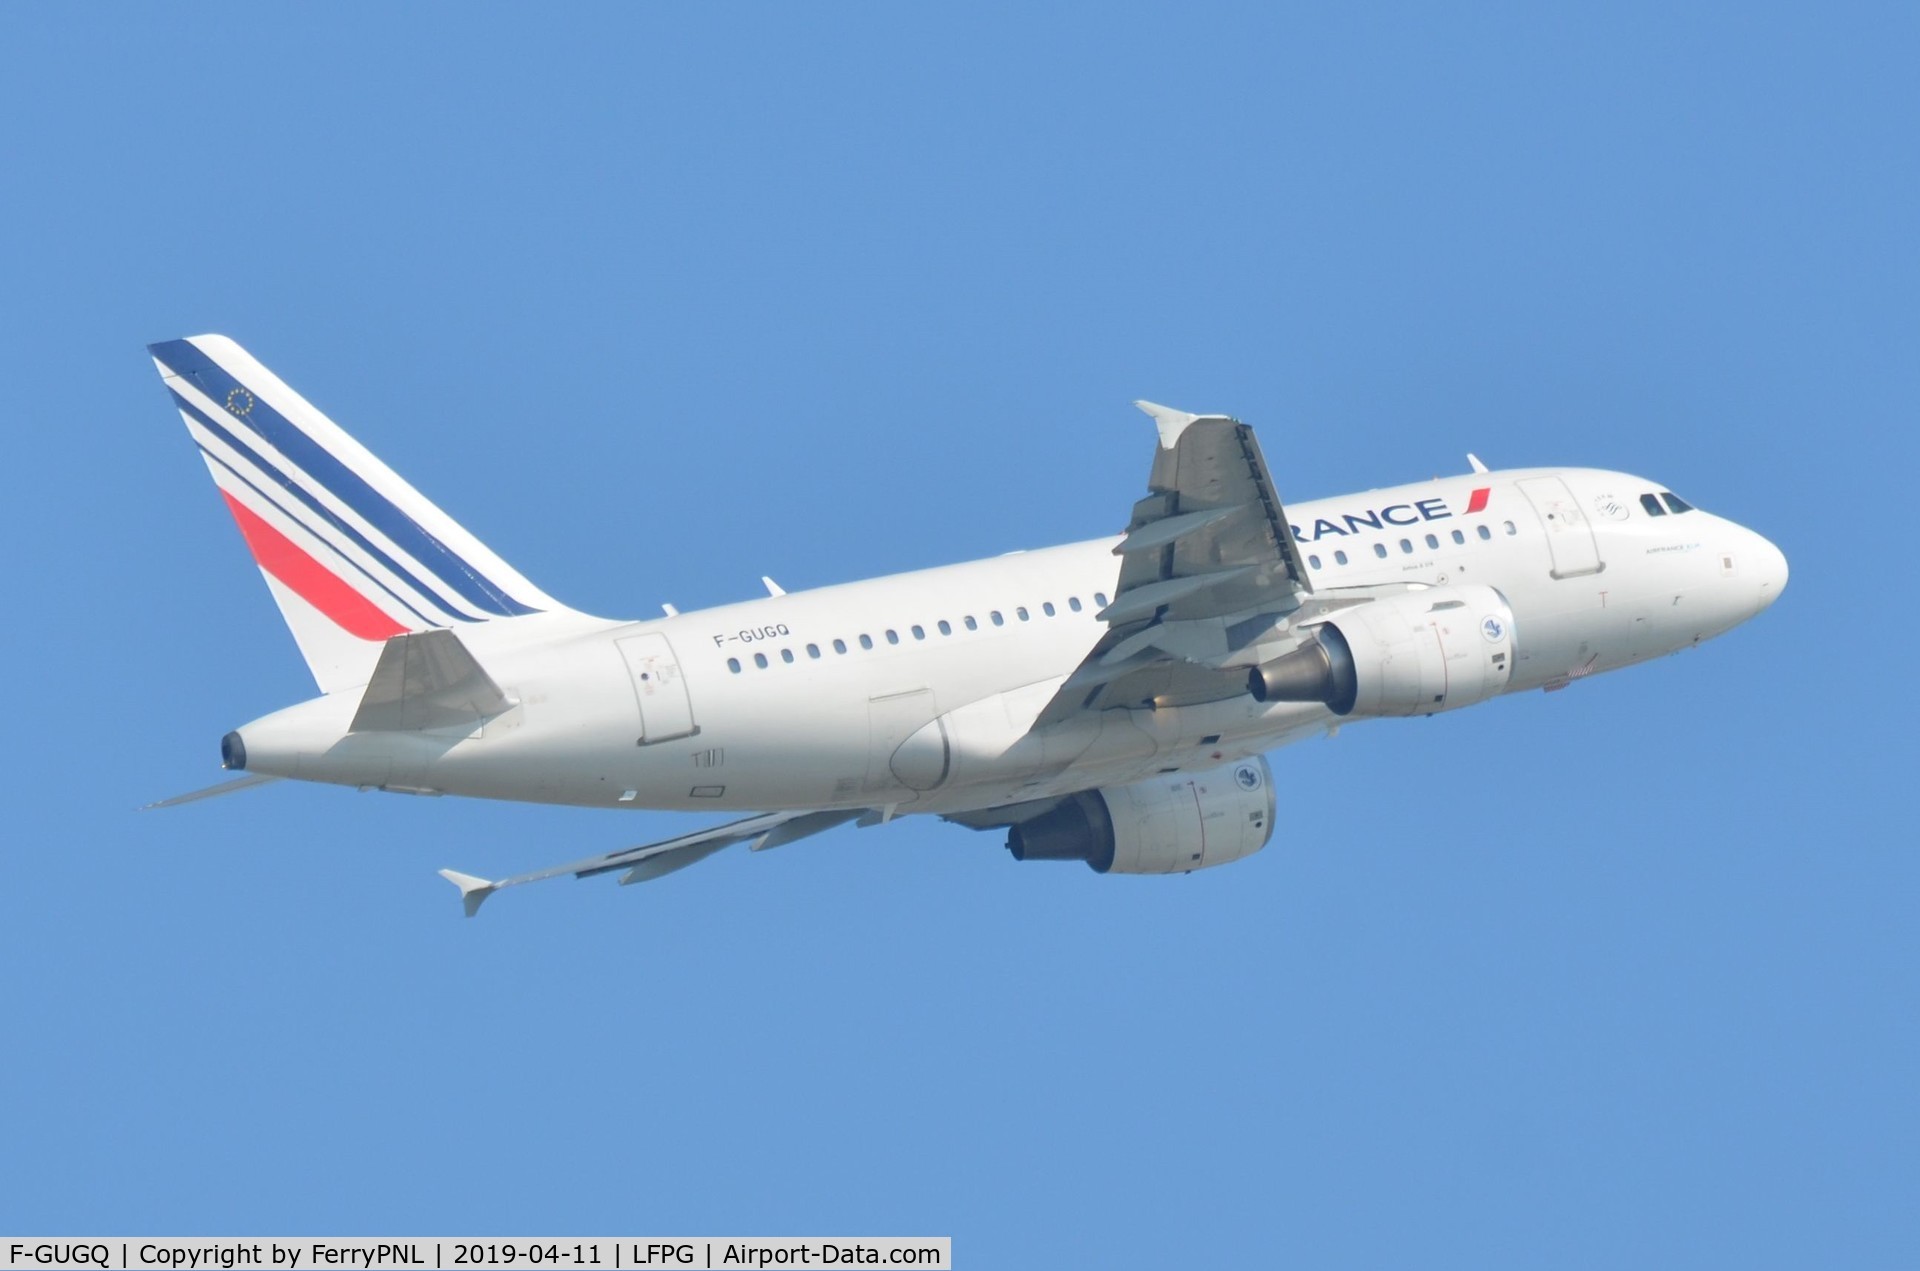 F-GUGQ, 2006 Airbus A318-111 C/N 2972, Air France A318 departing